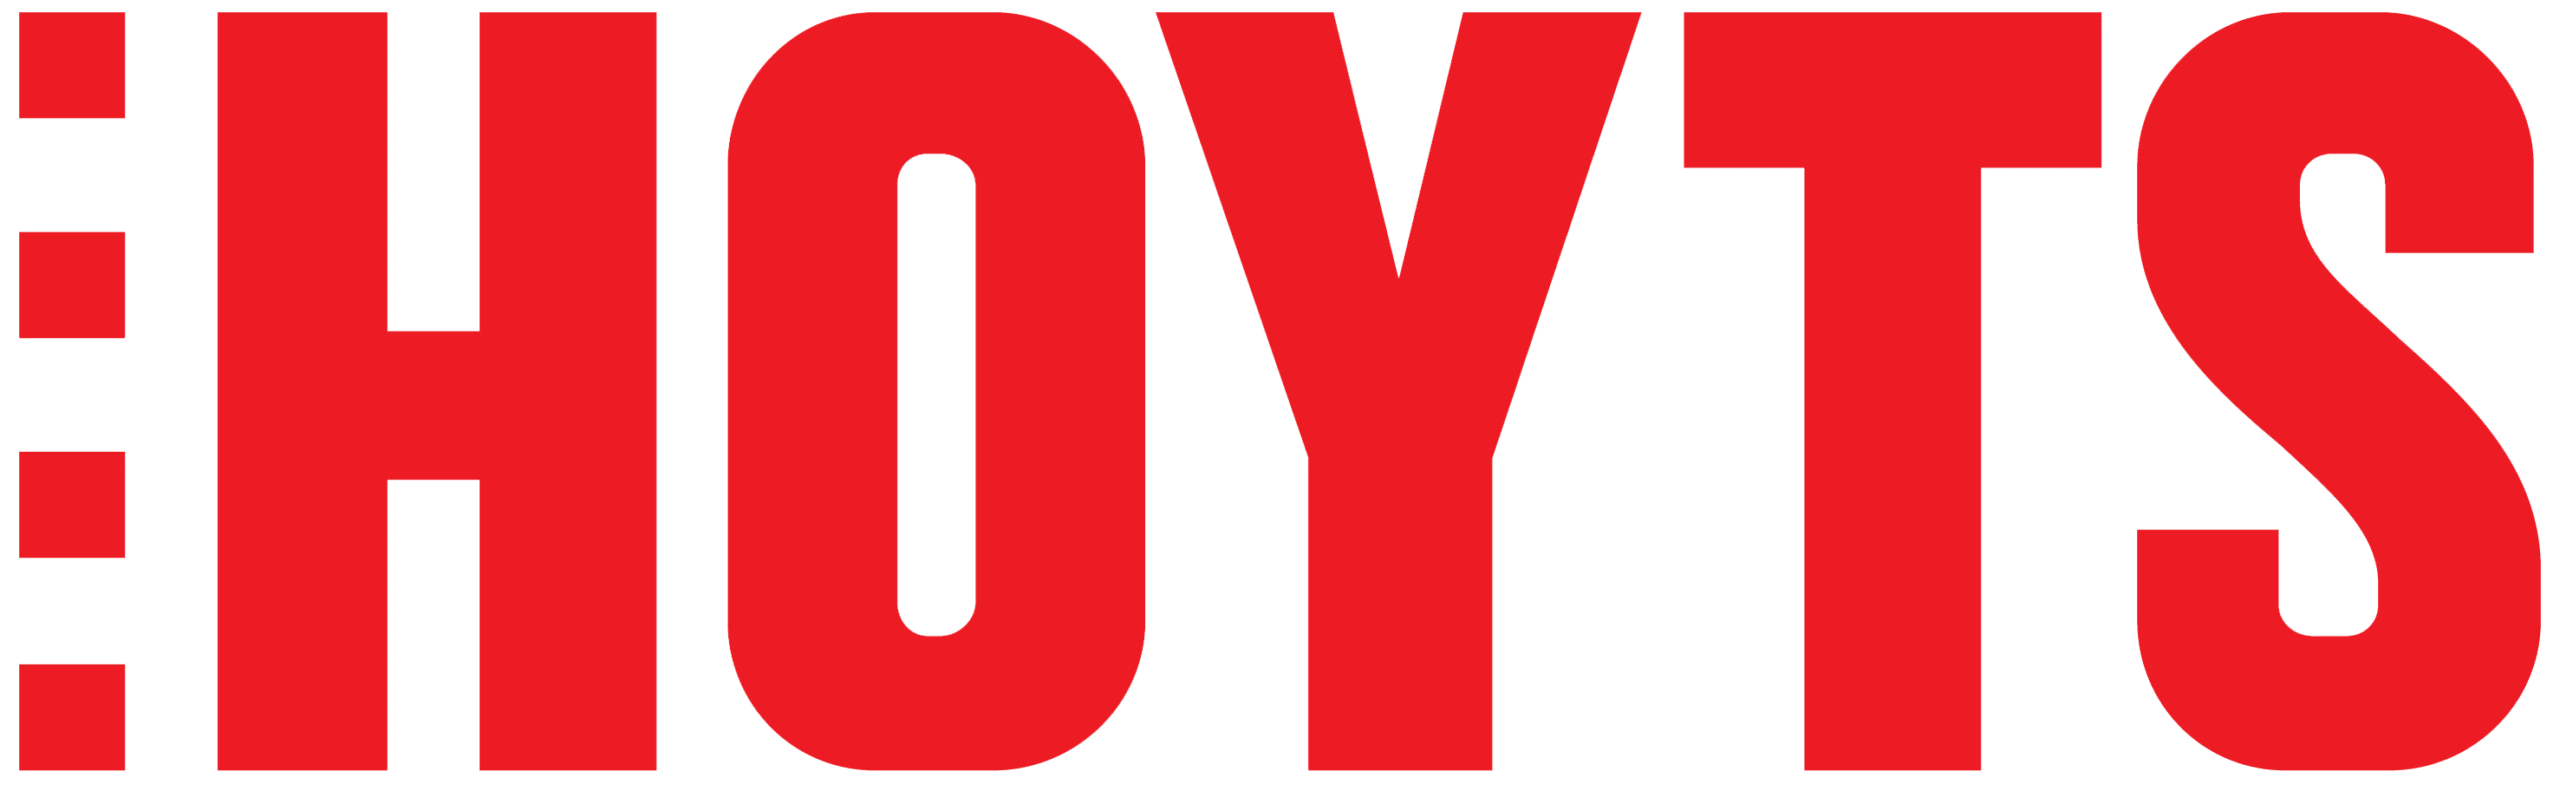 hoyts-logo